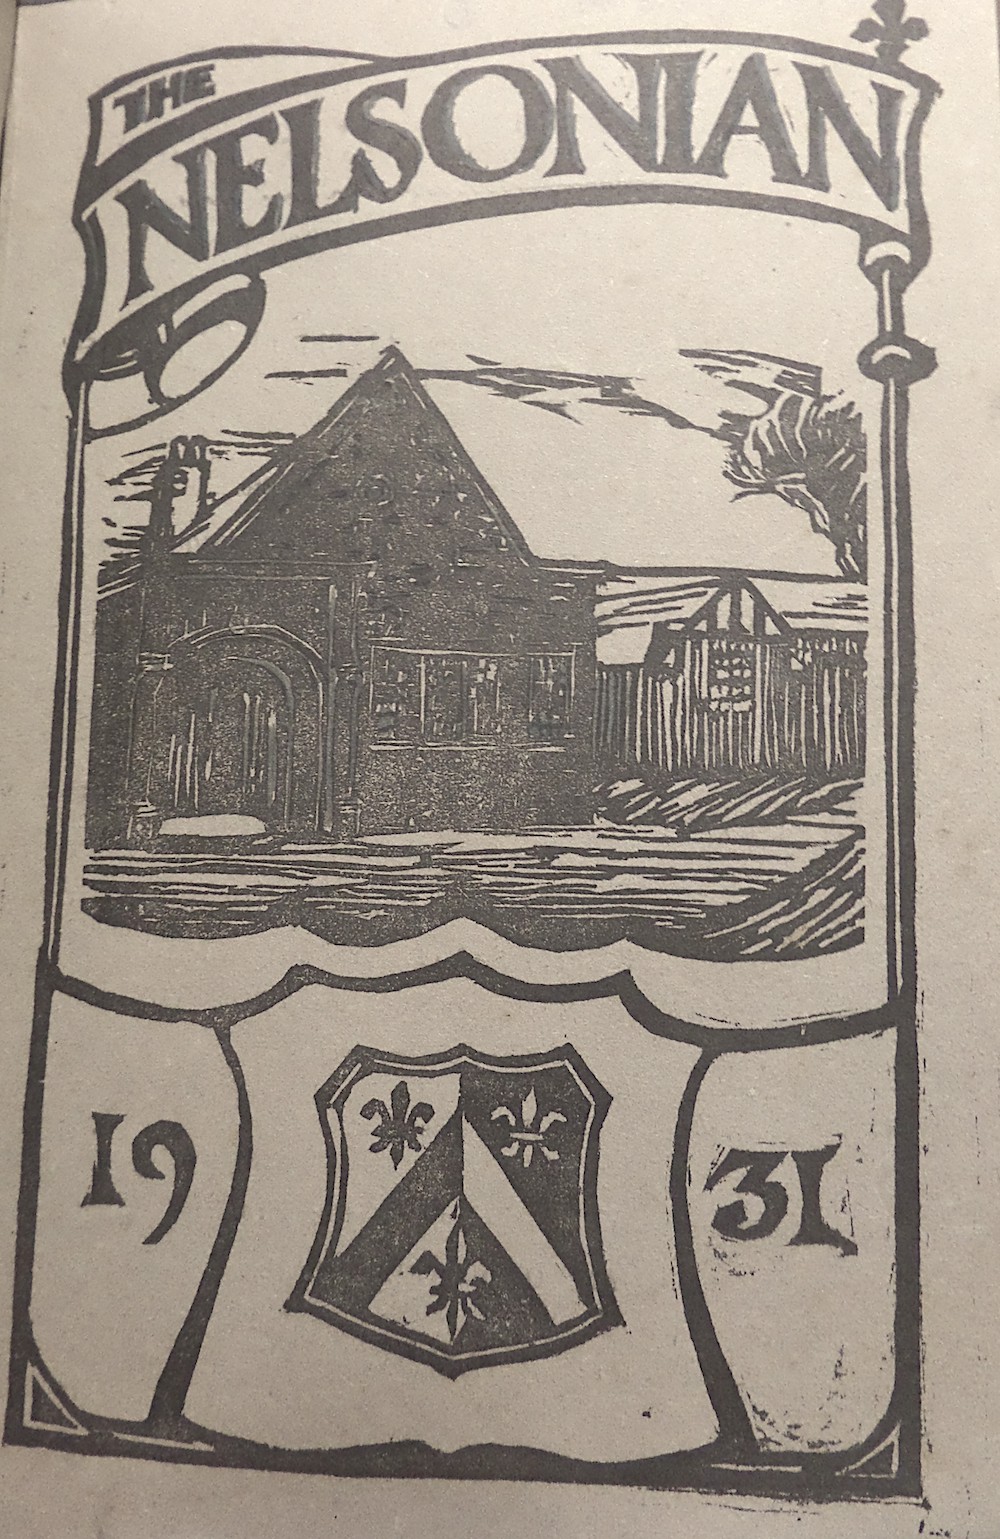 The Nelsonian Magazine, 1931 Courtesy of Cumbria Archive Service, Archive ref: DEC 4/38